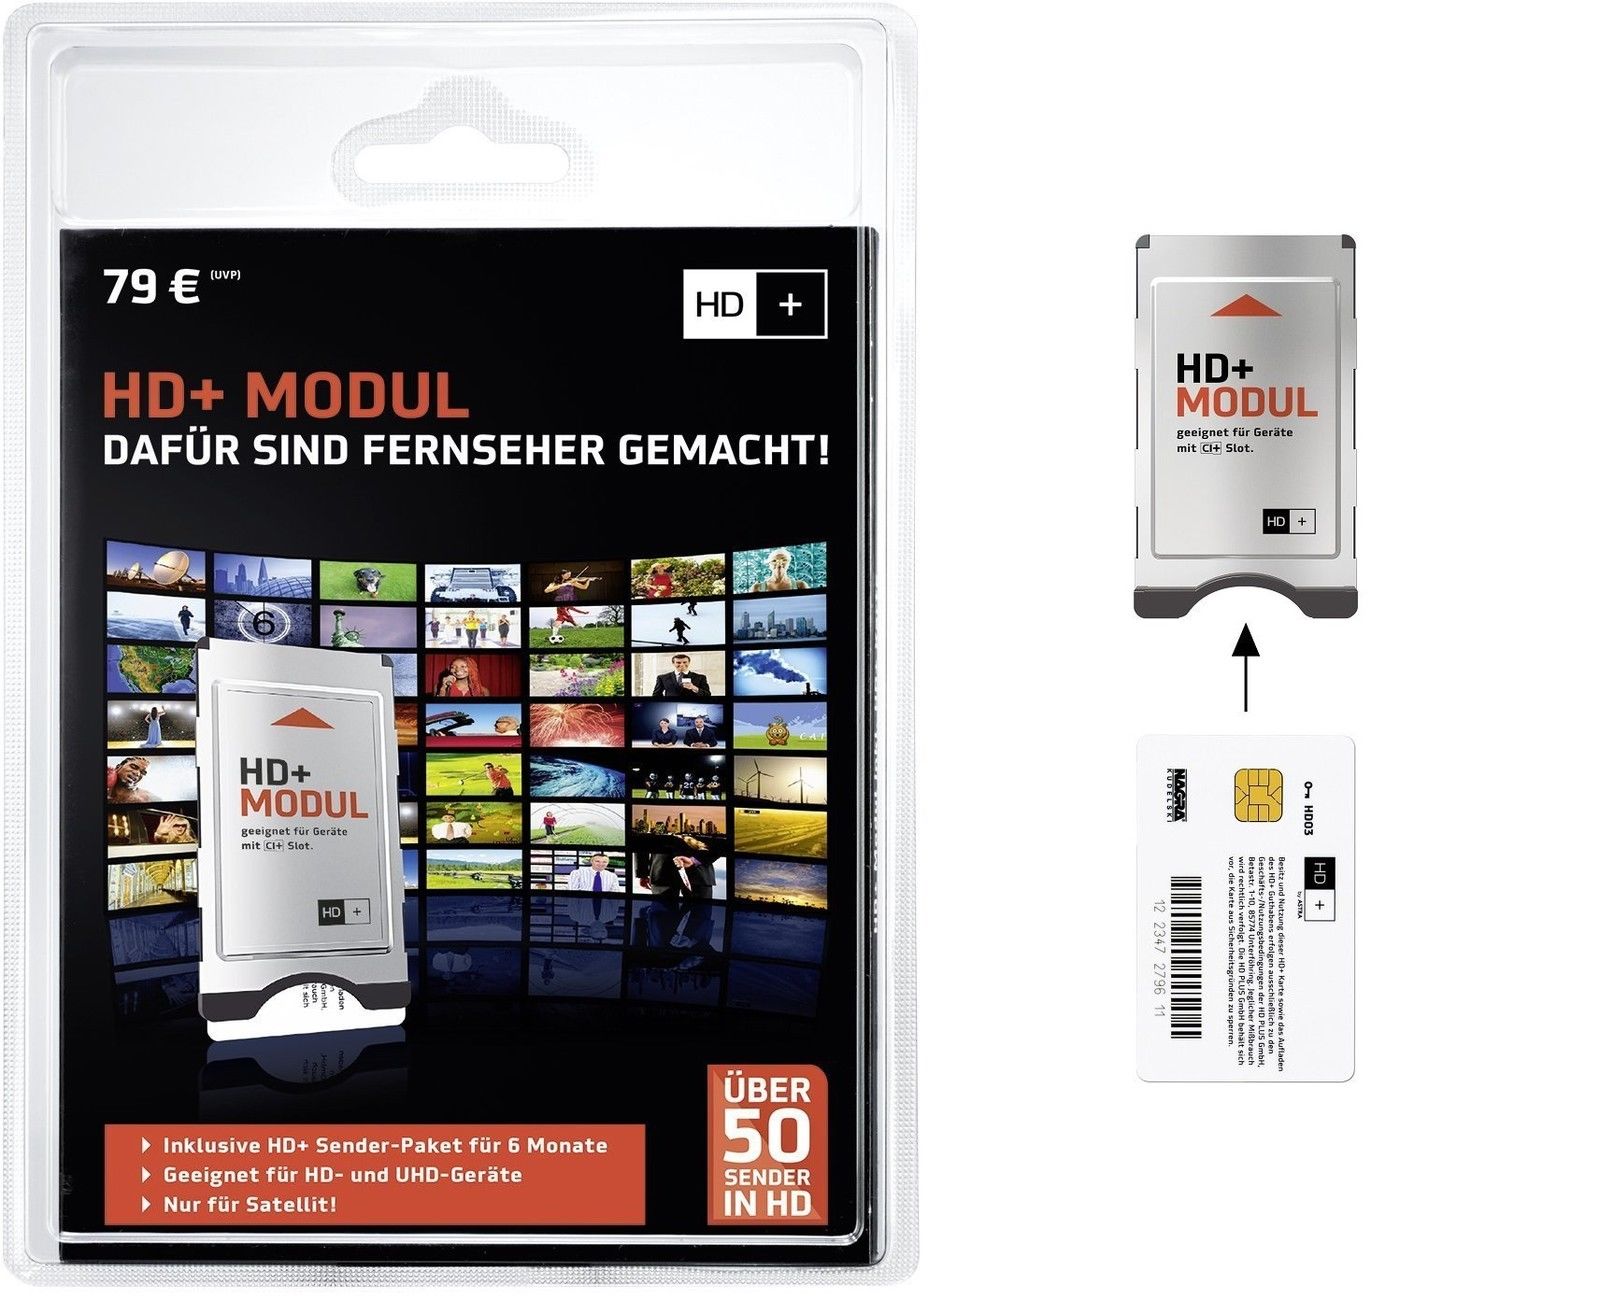 HD Plus CI+ Modul Ultra HD inkl. HD+ Sender-Paket für 6 Monate